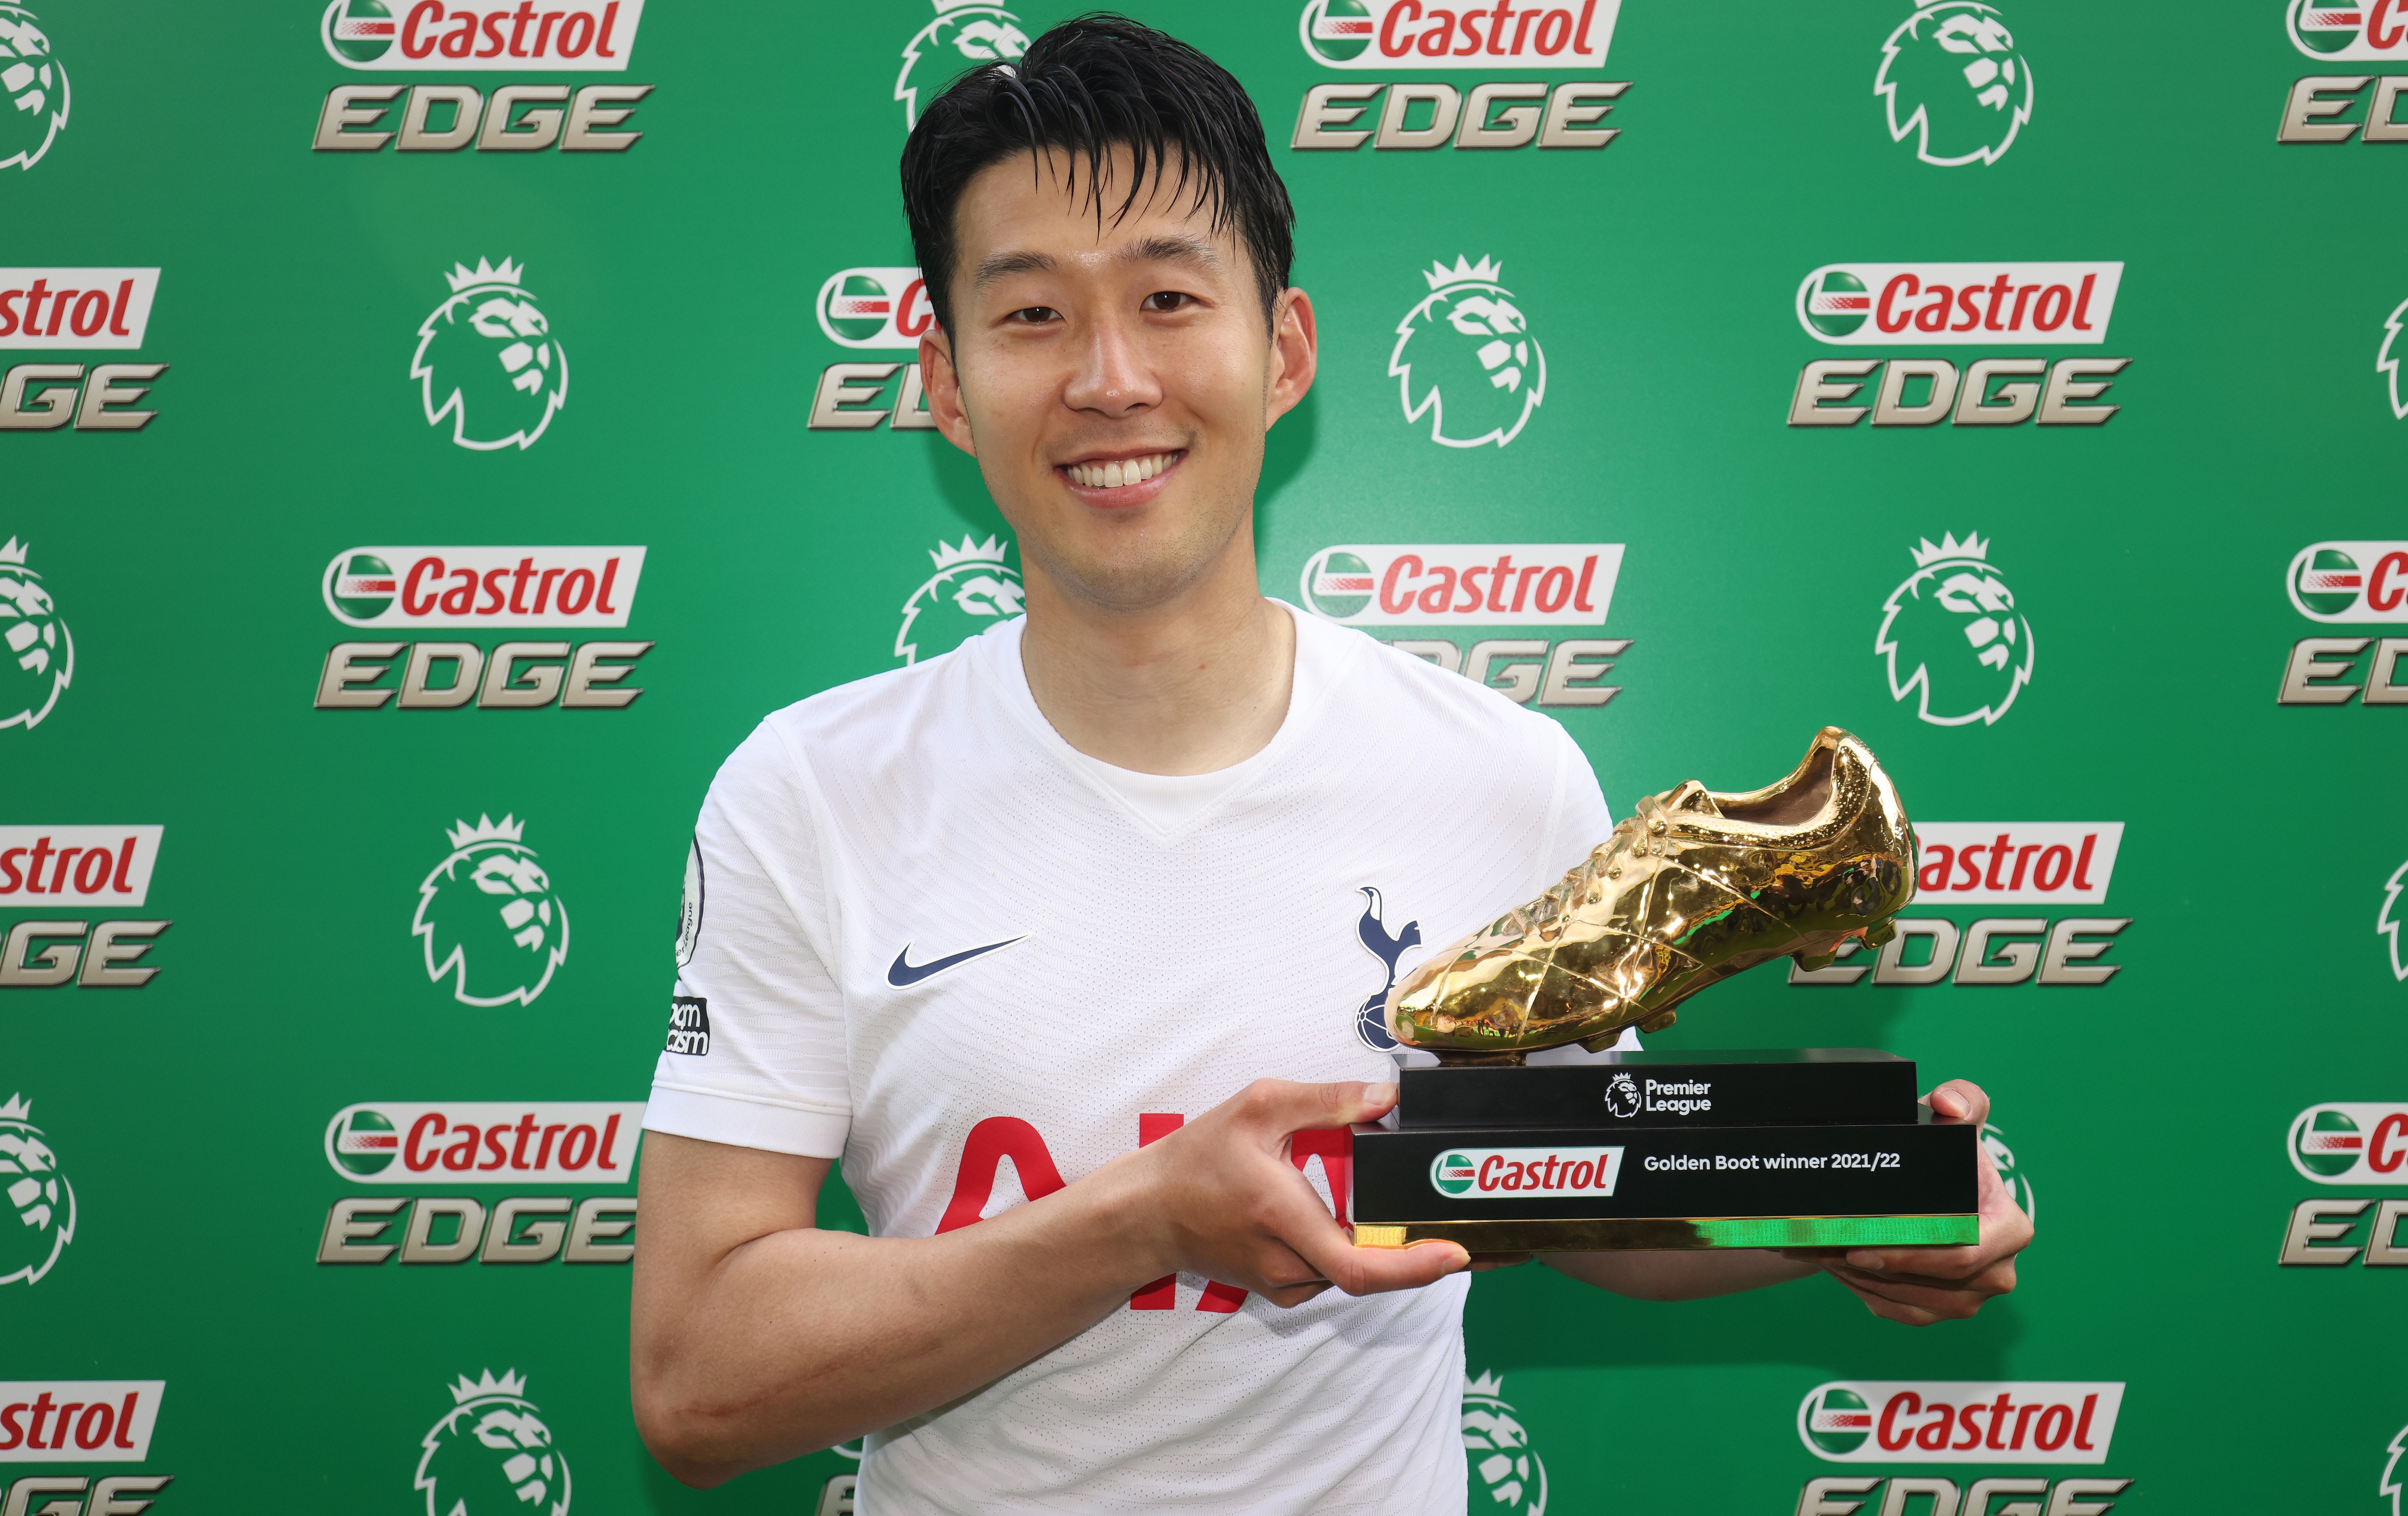 Tottenham forward Son Heung-min holding the 2021/22 Premier League Golden Boot trophy